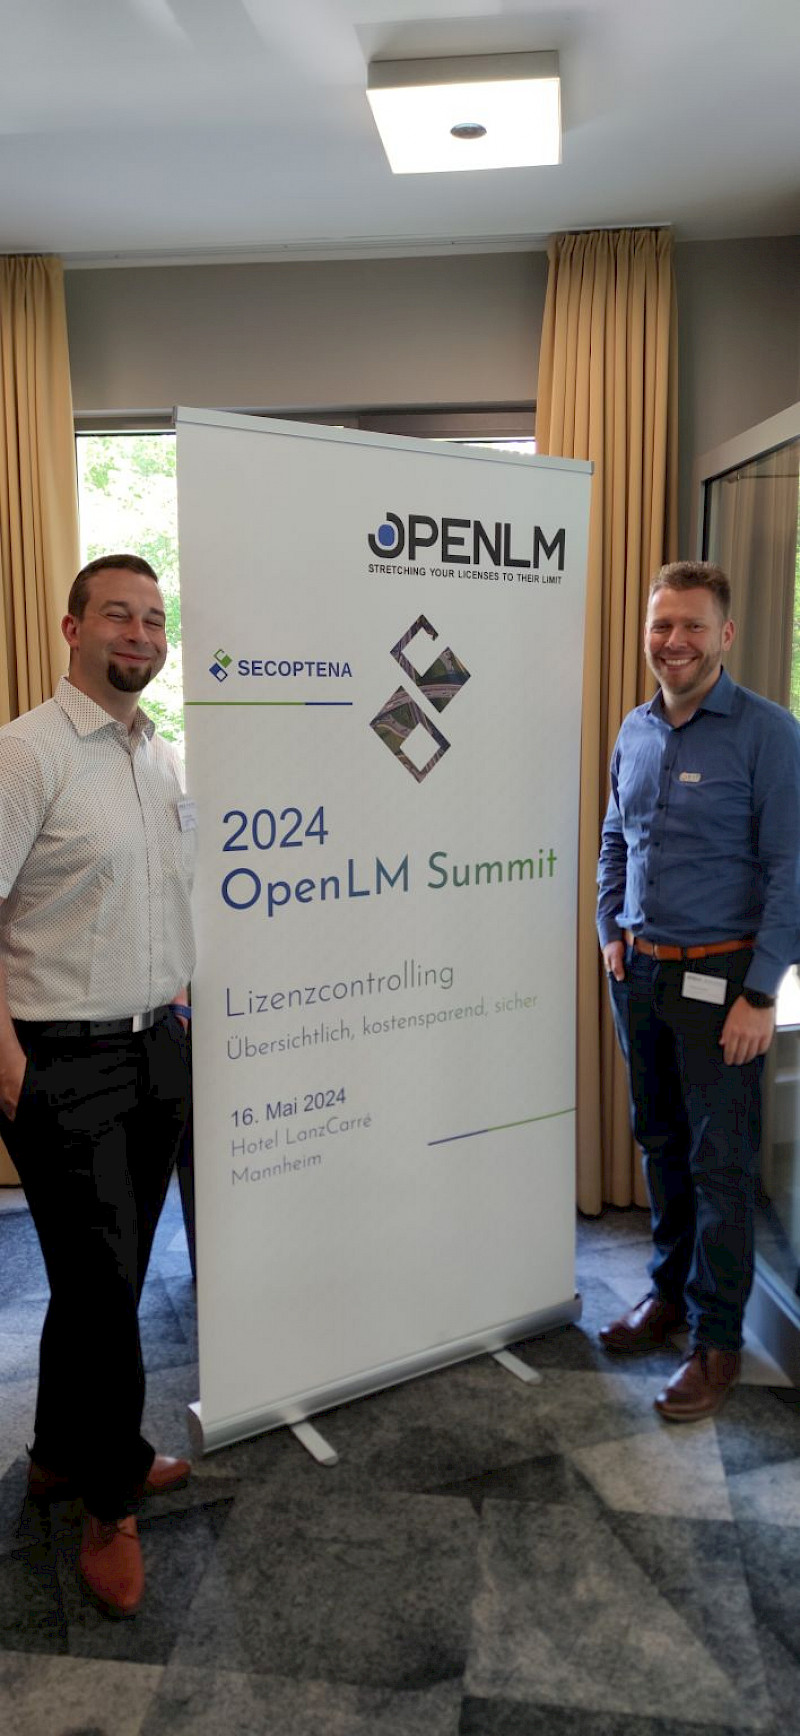 OpenLM Summit